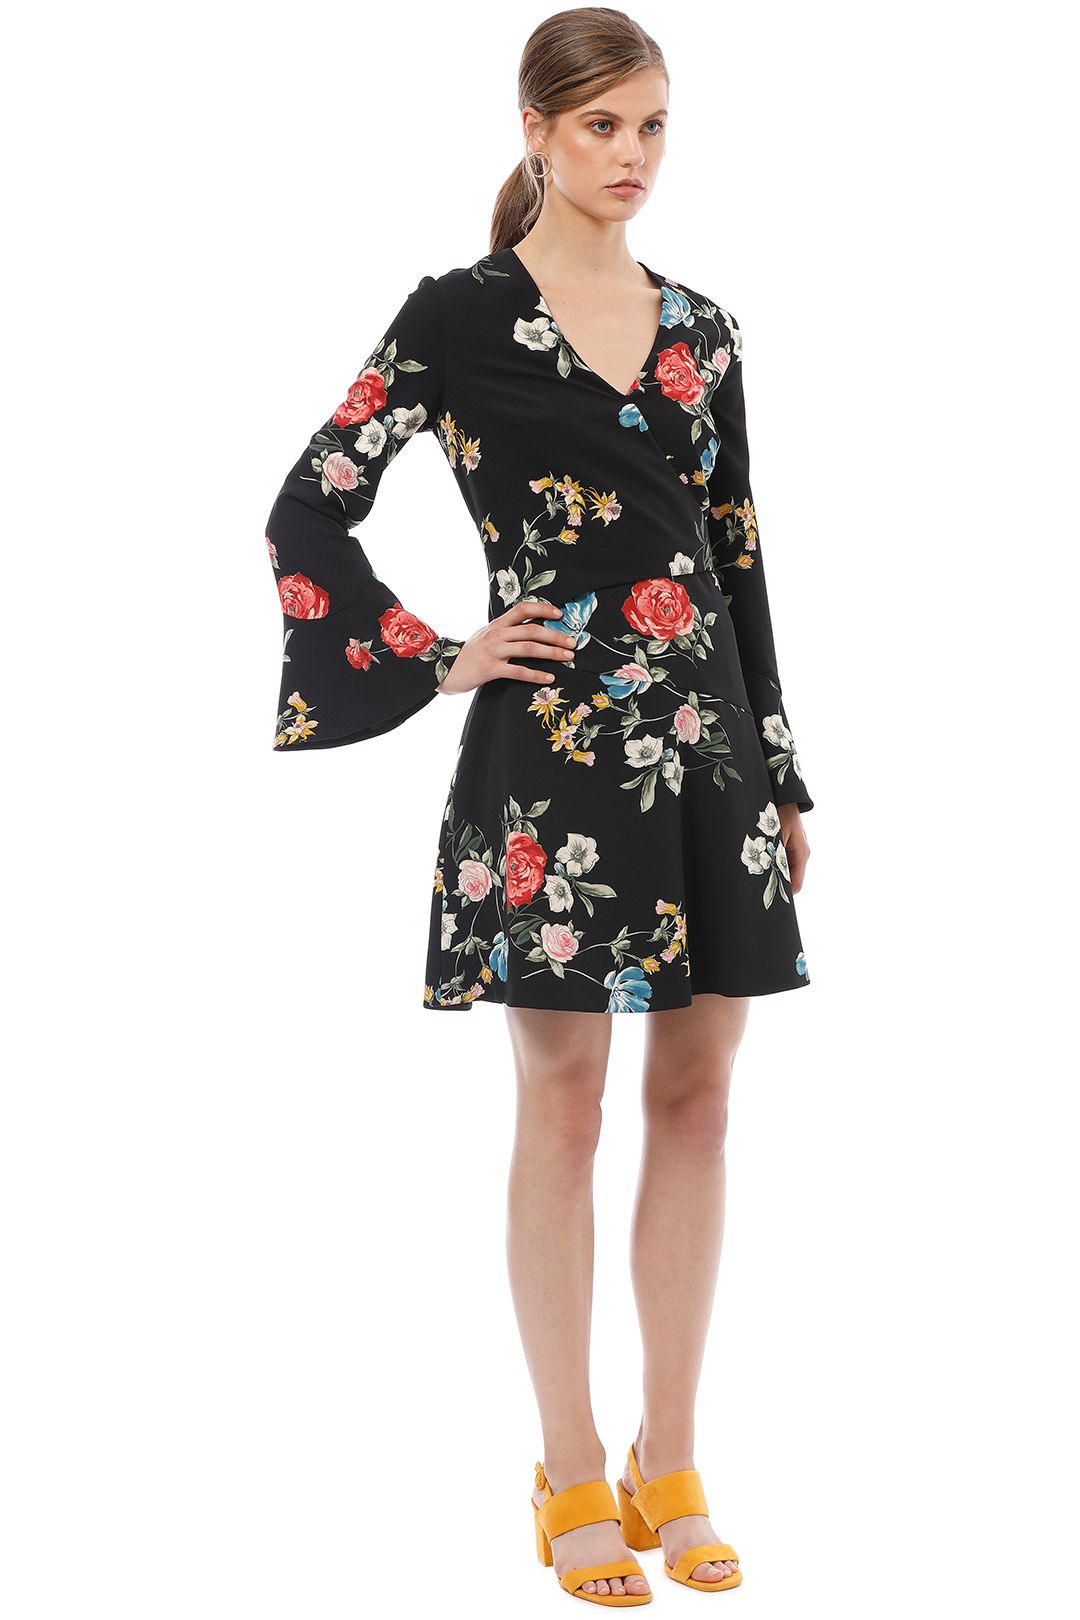 Cue - Watercolour Rose Long Sleeve Dress - Black Floral - Side